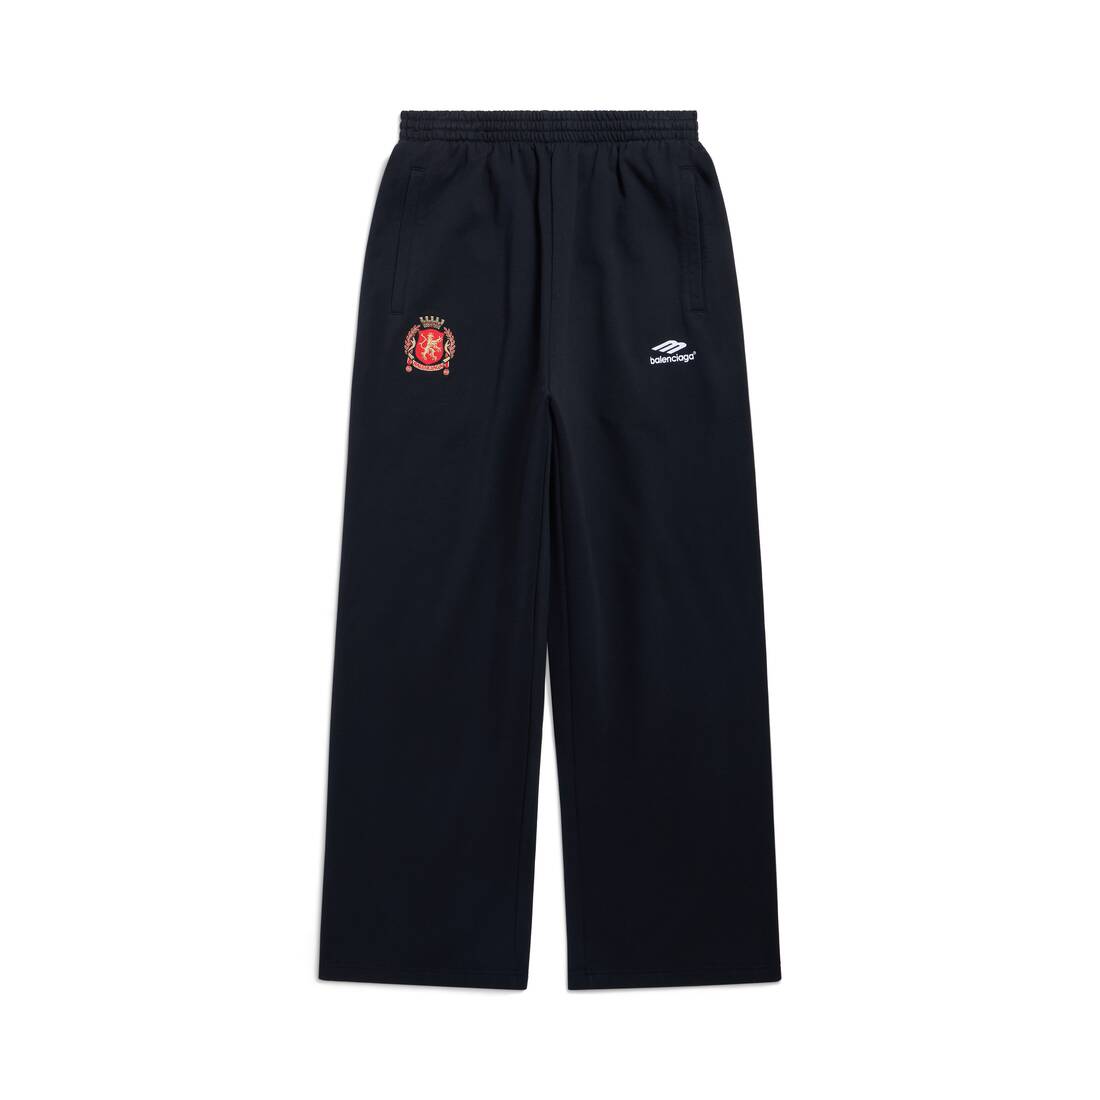 Soccer Baggy Sweatpants in Black/white | Balenciaga NL